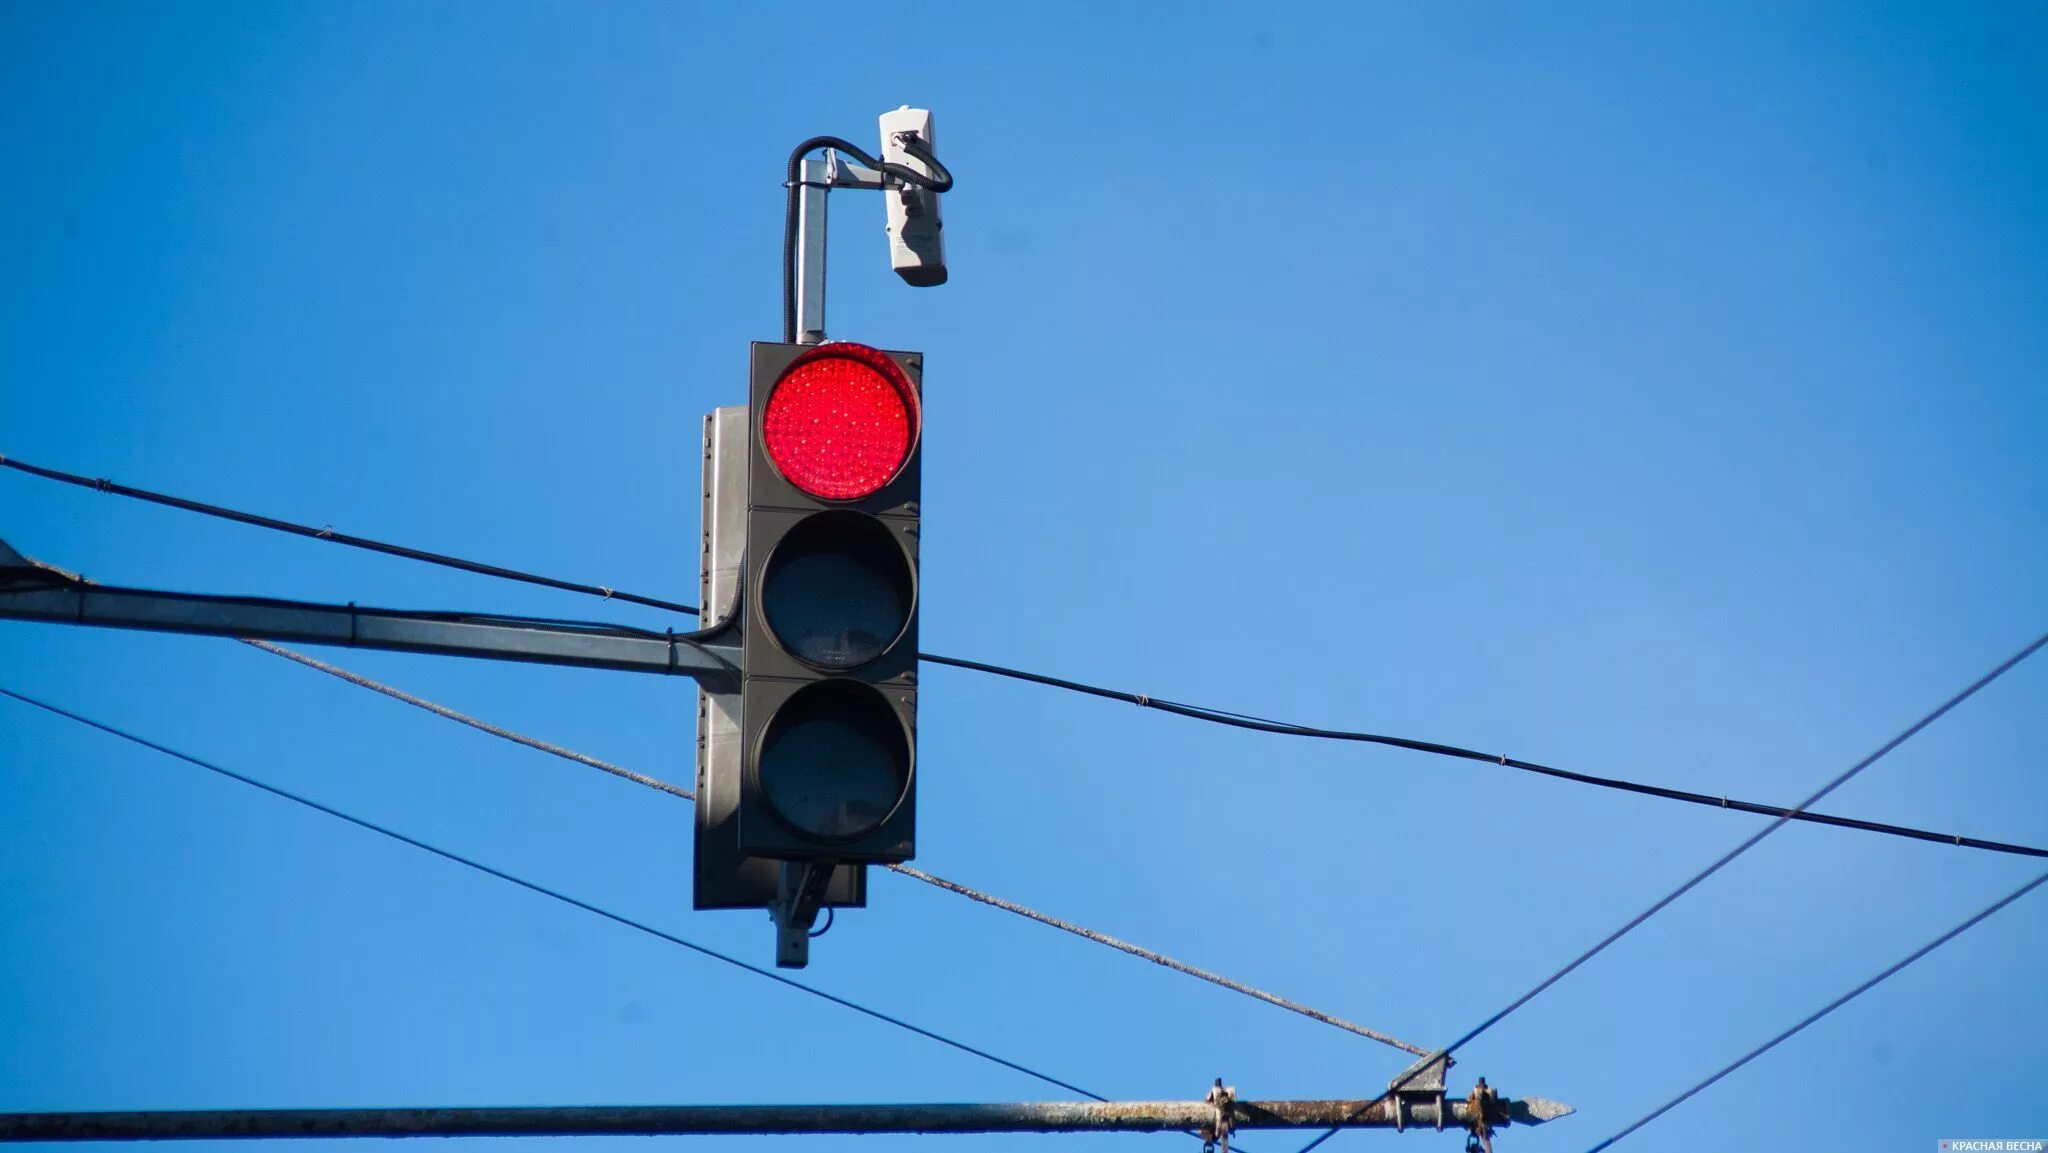 Я лечу на красный свет. Красный светофор. Красный сигнал светофора. Запрещающий сигнал светофора. Красный цвет светофора.